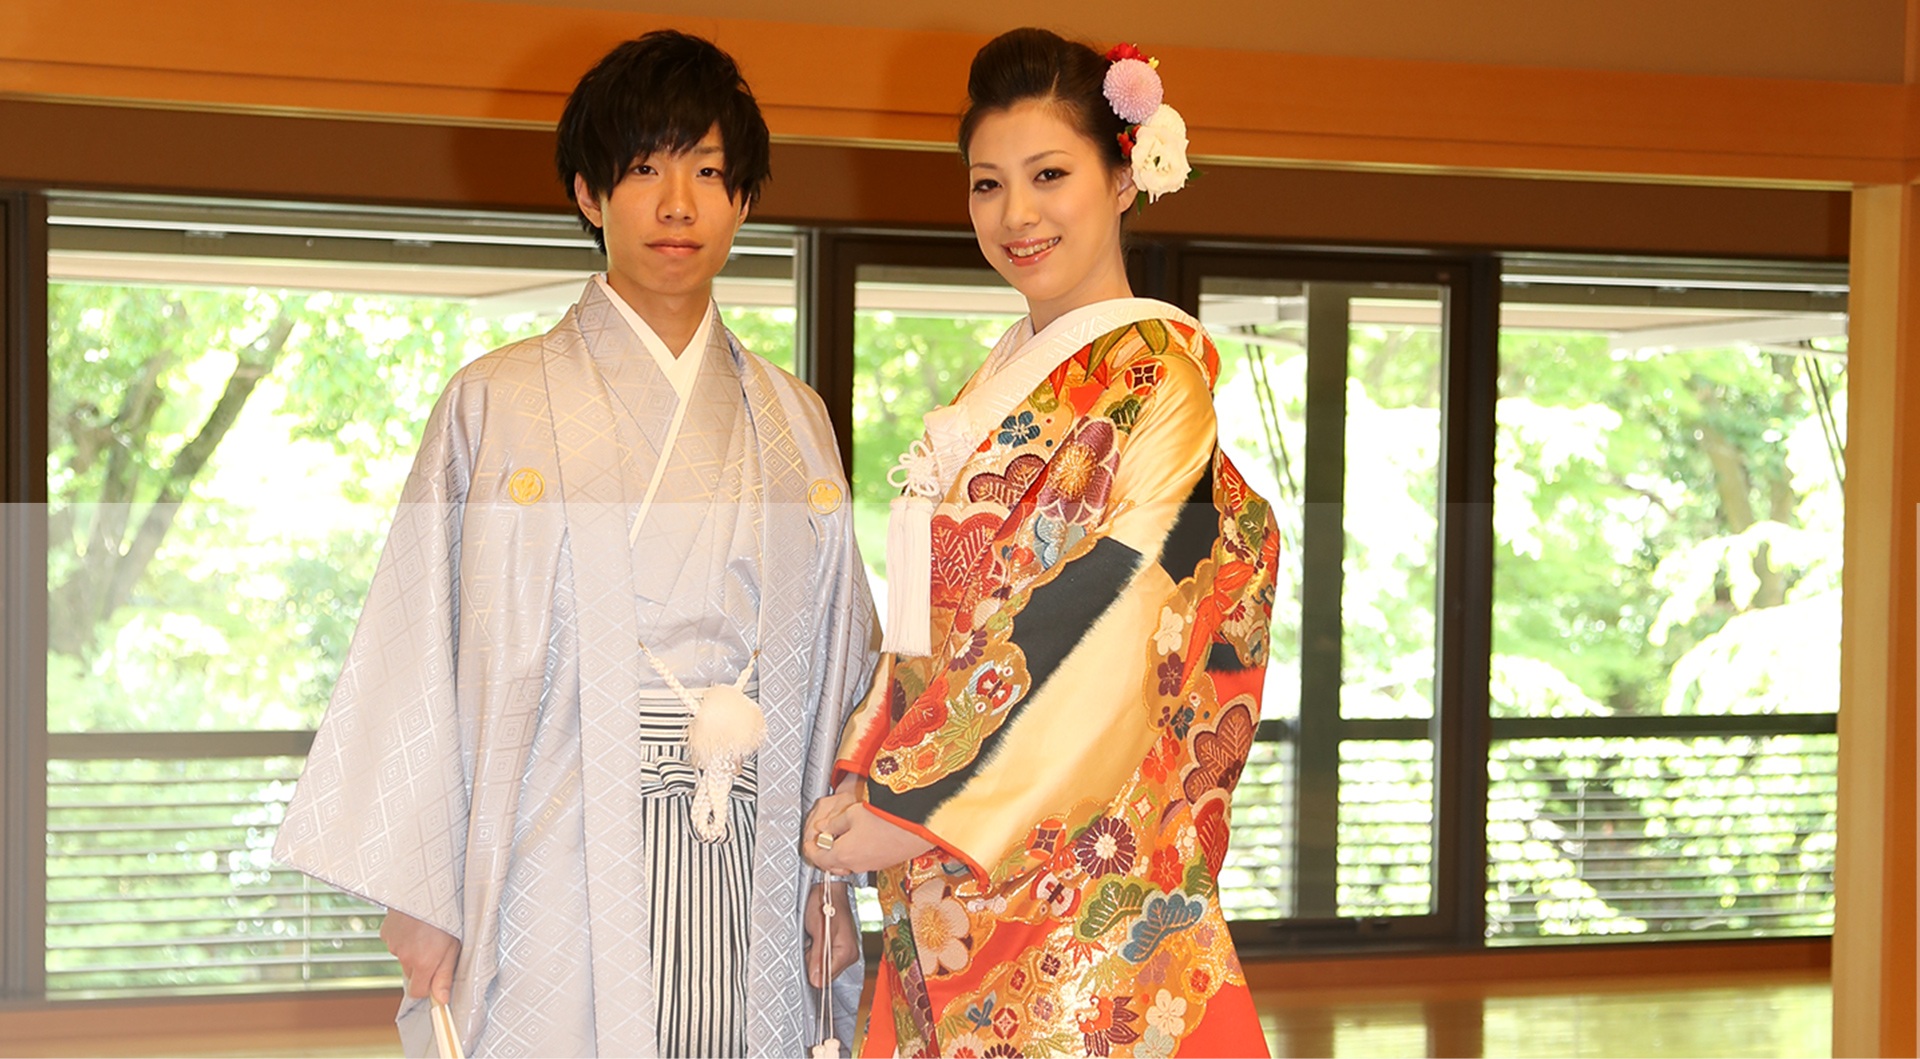 JAPANESE WEDDING 和装婚礼